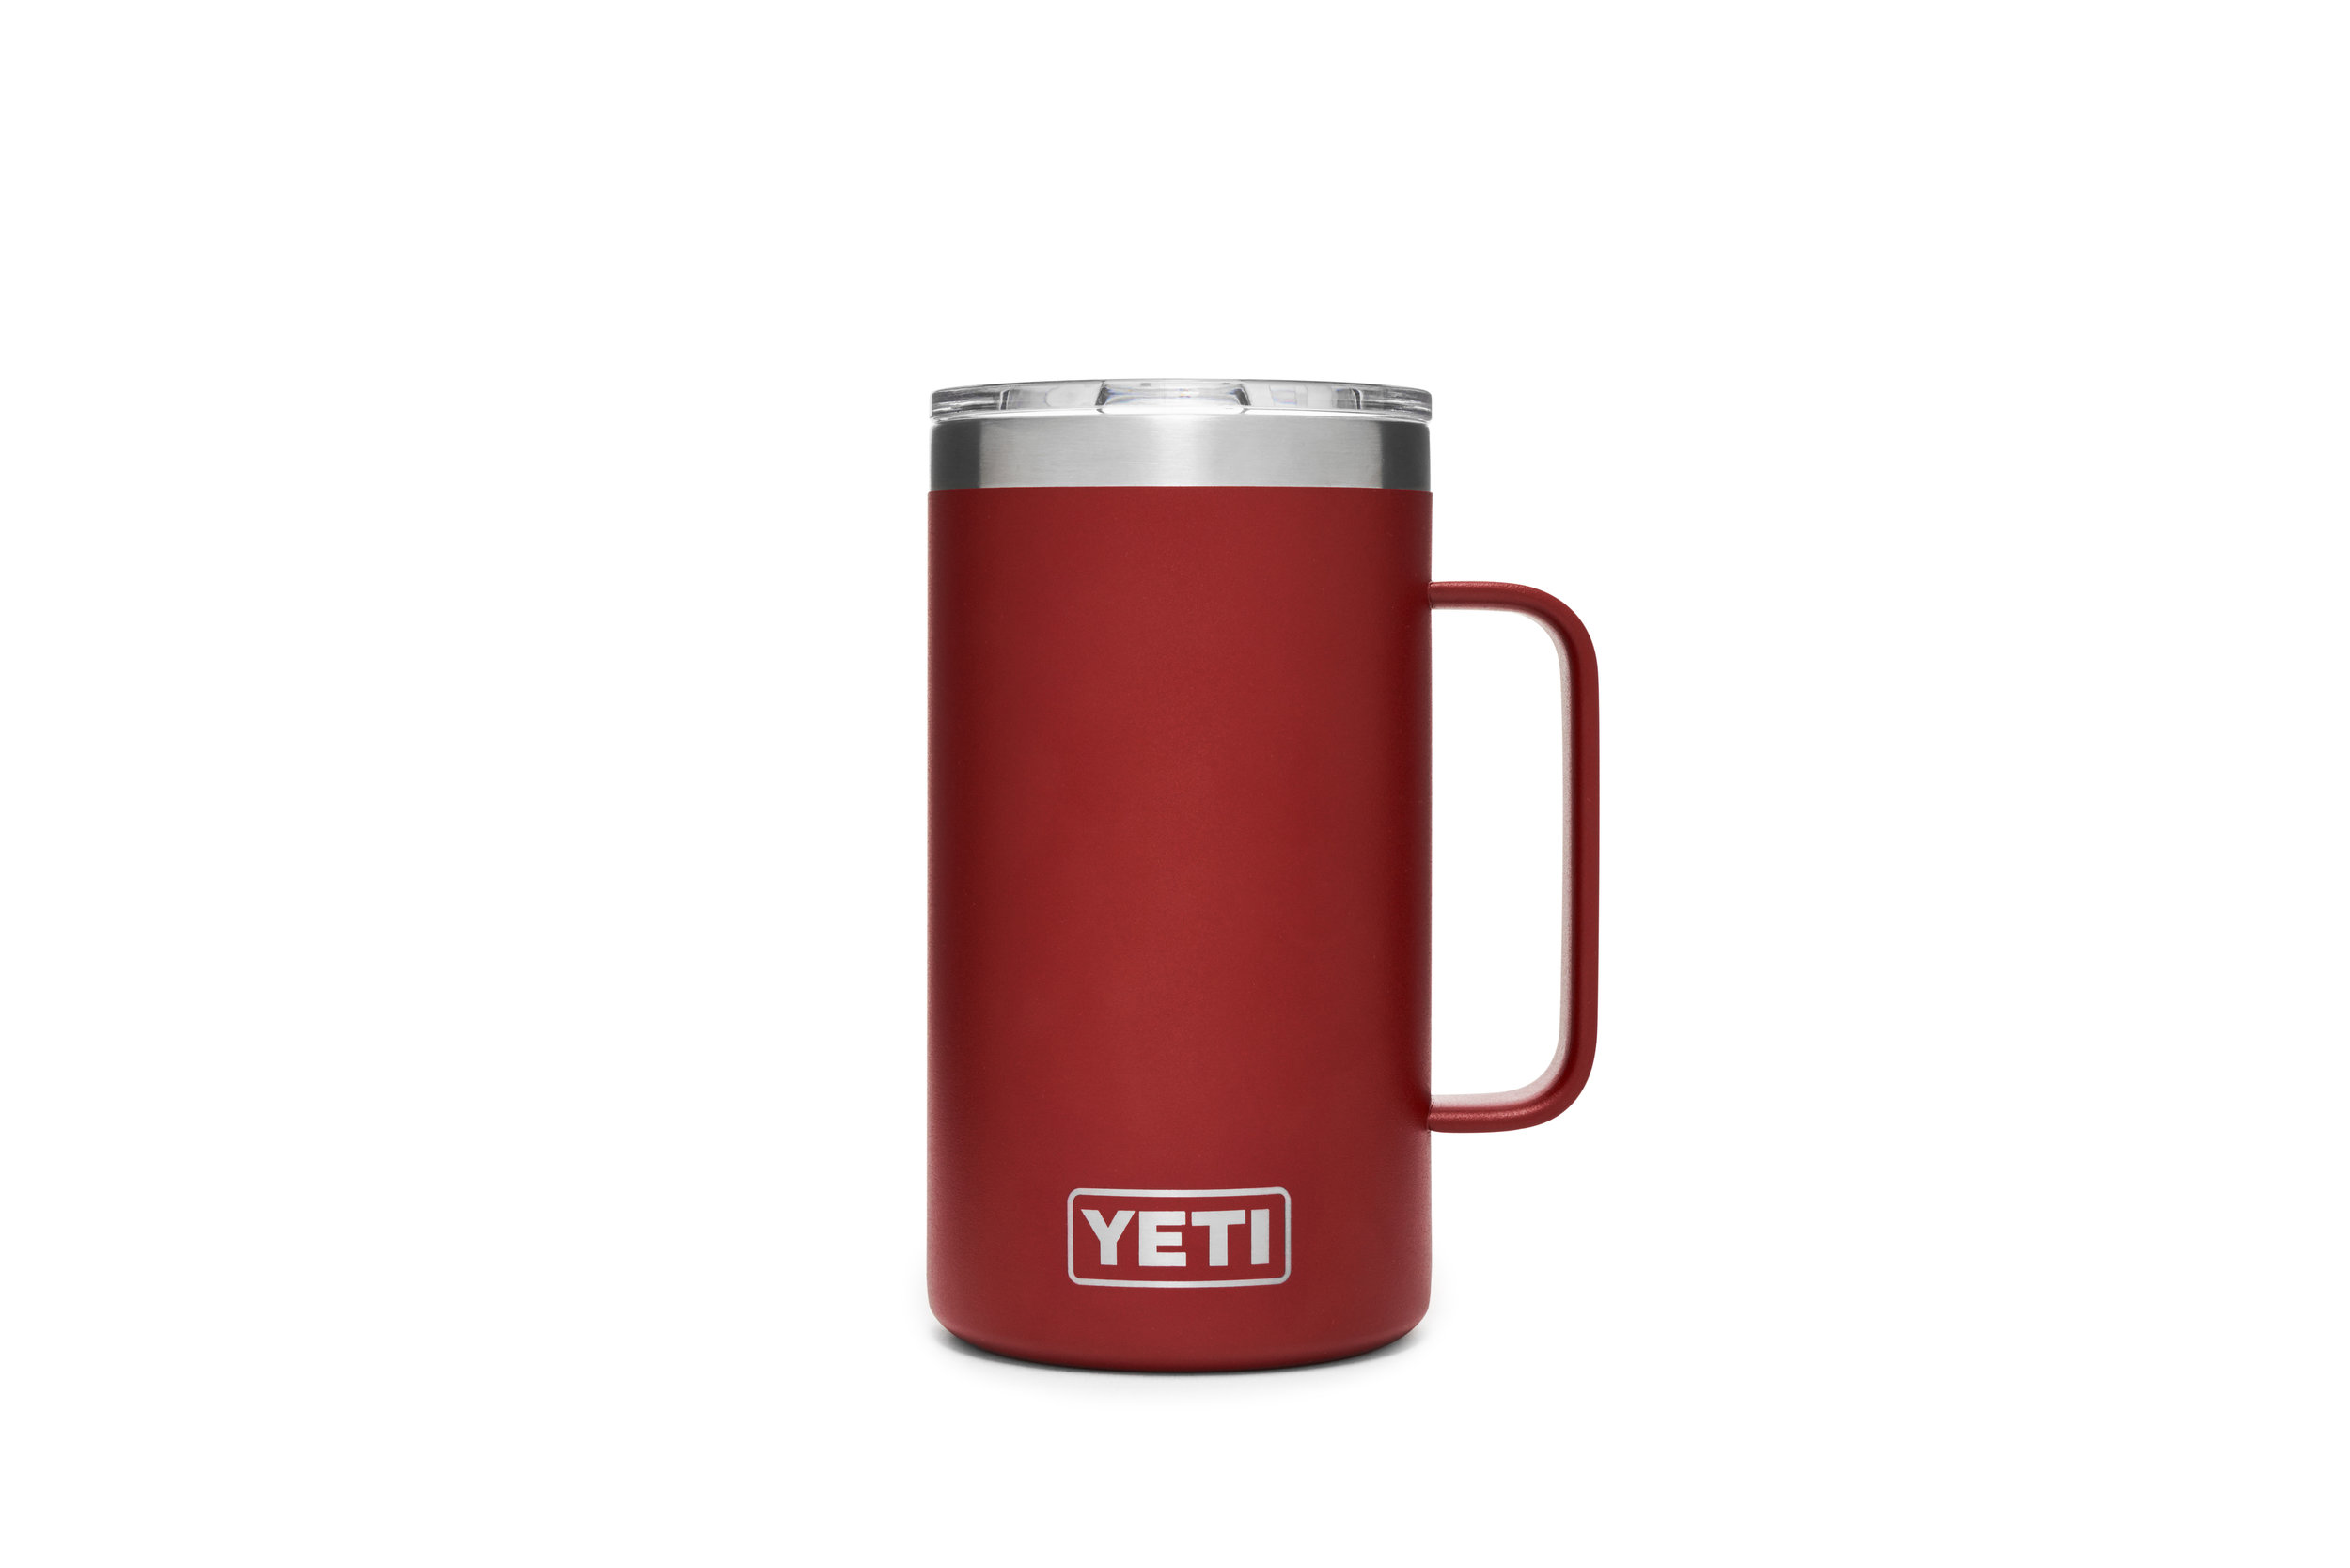 YETI Announces 24 Ounce Rambler Mug